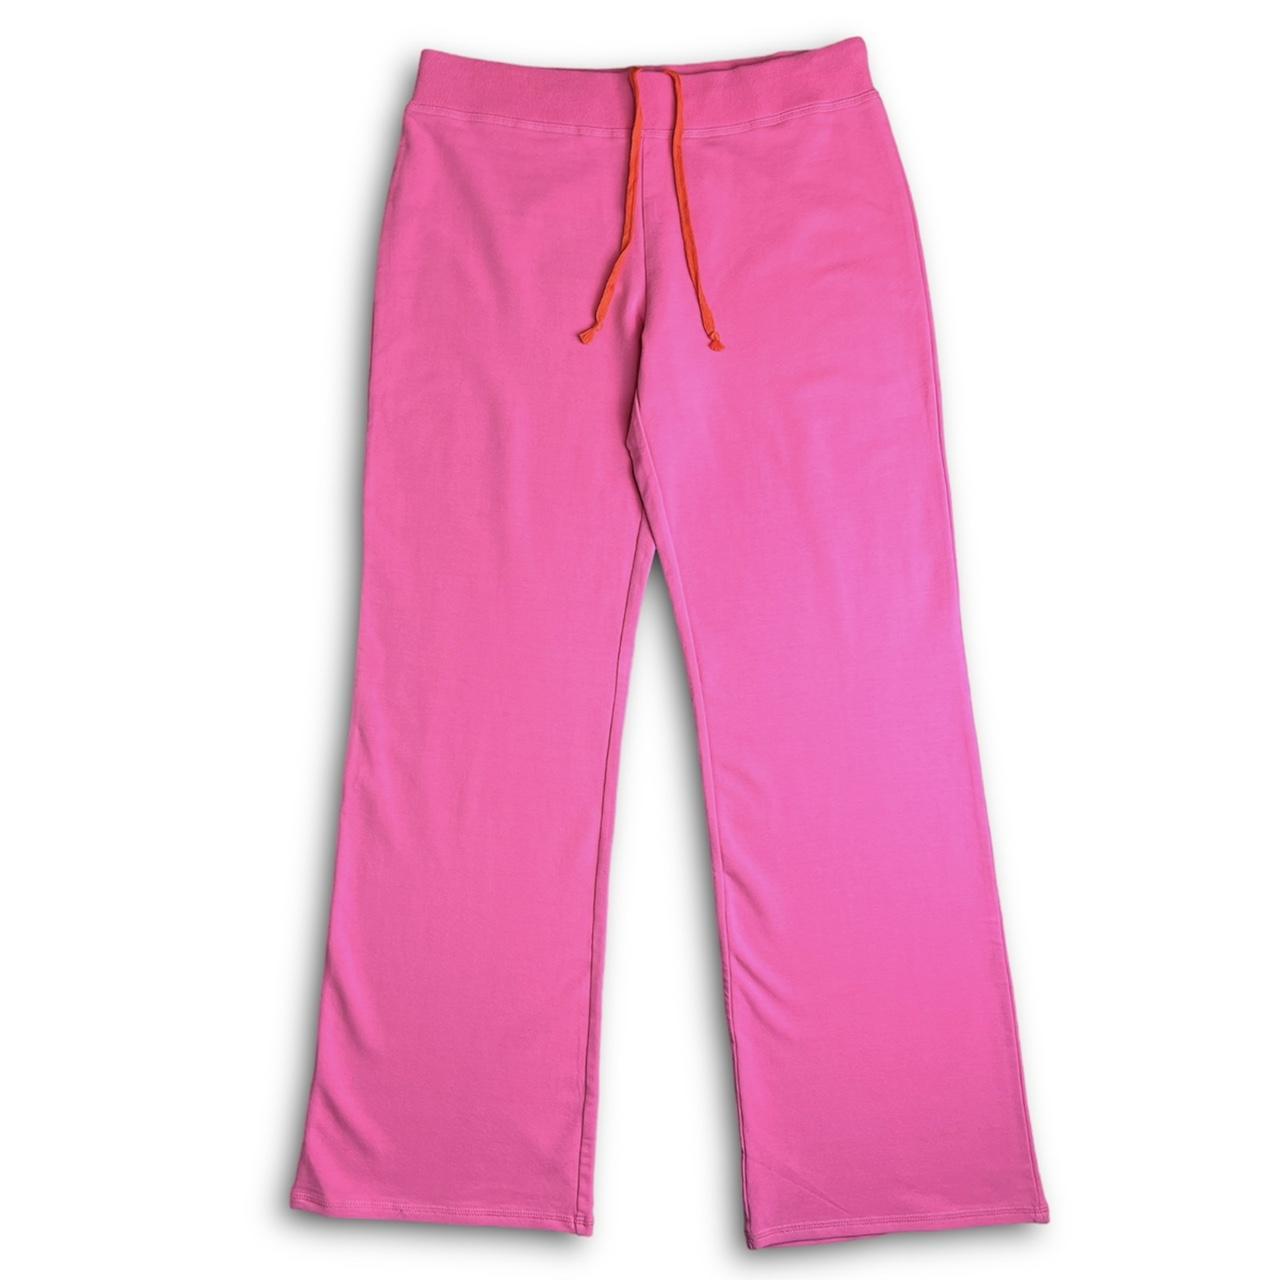 La Senza Women's Pink and Orange Joggers-tracksuits (4)